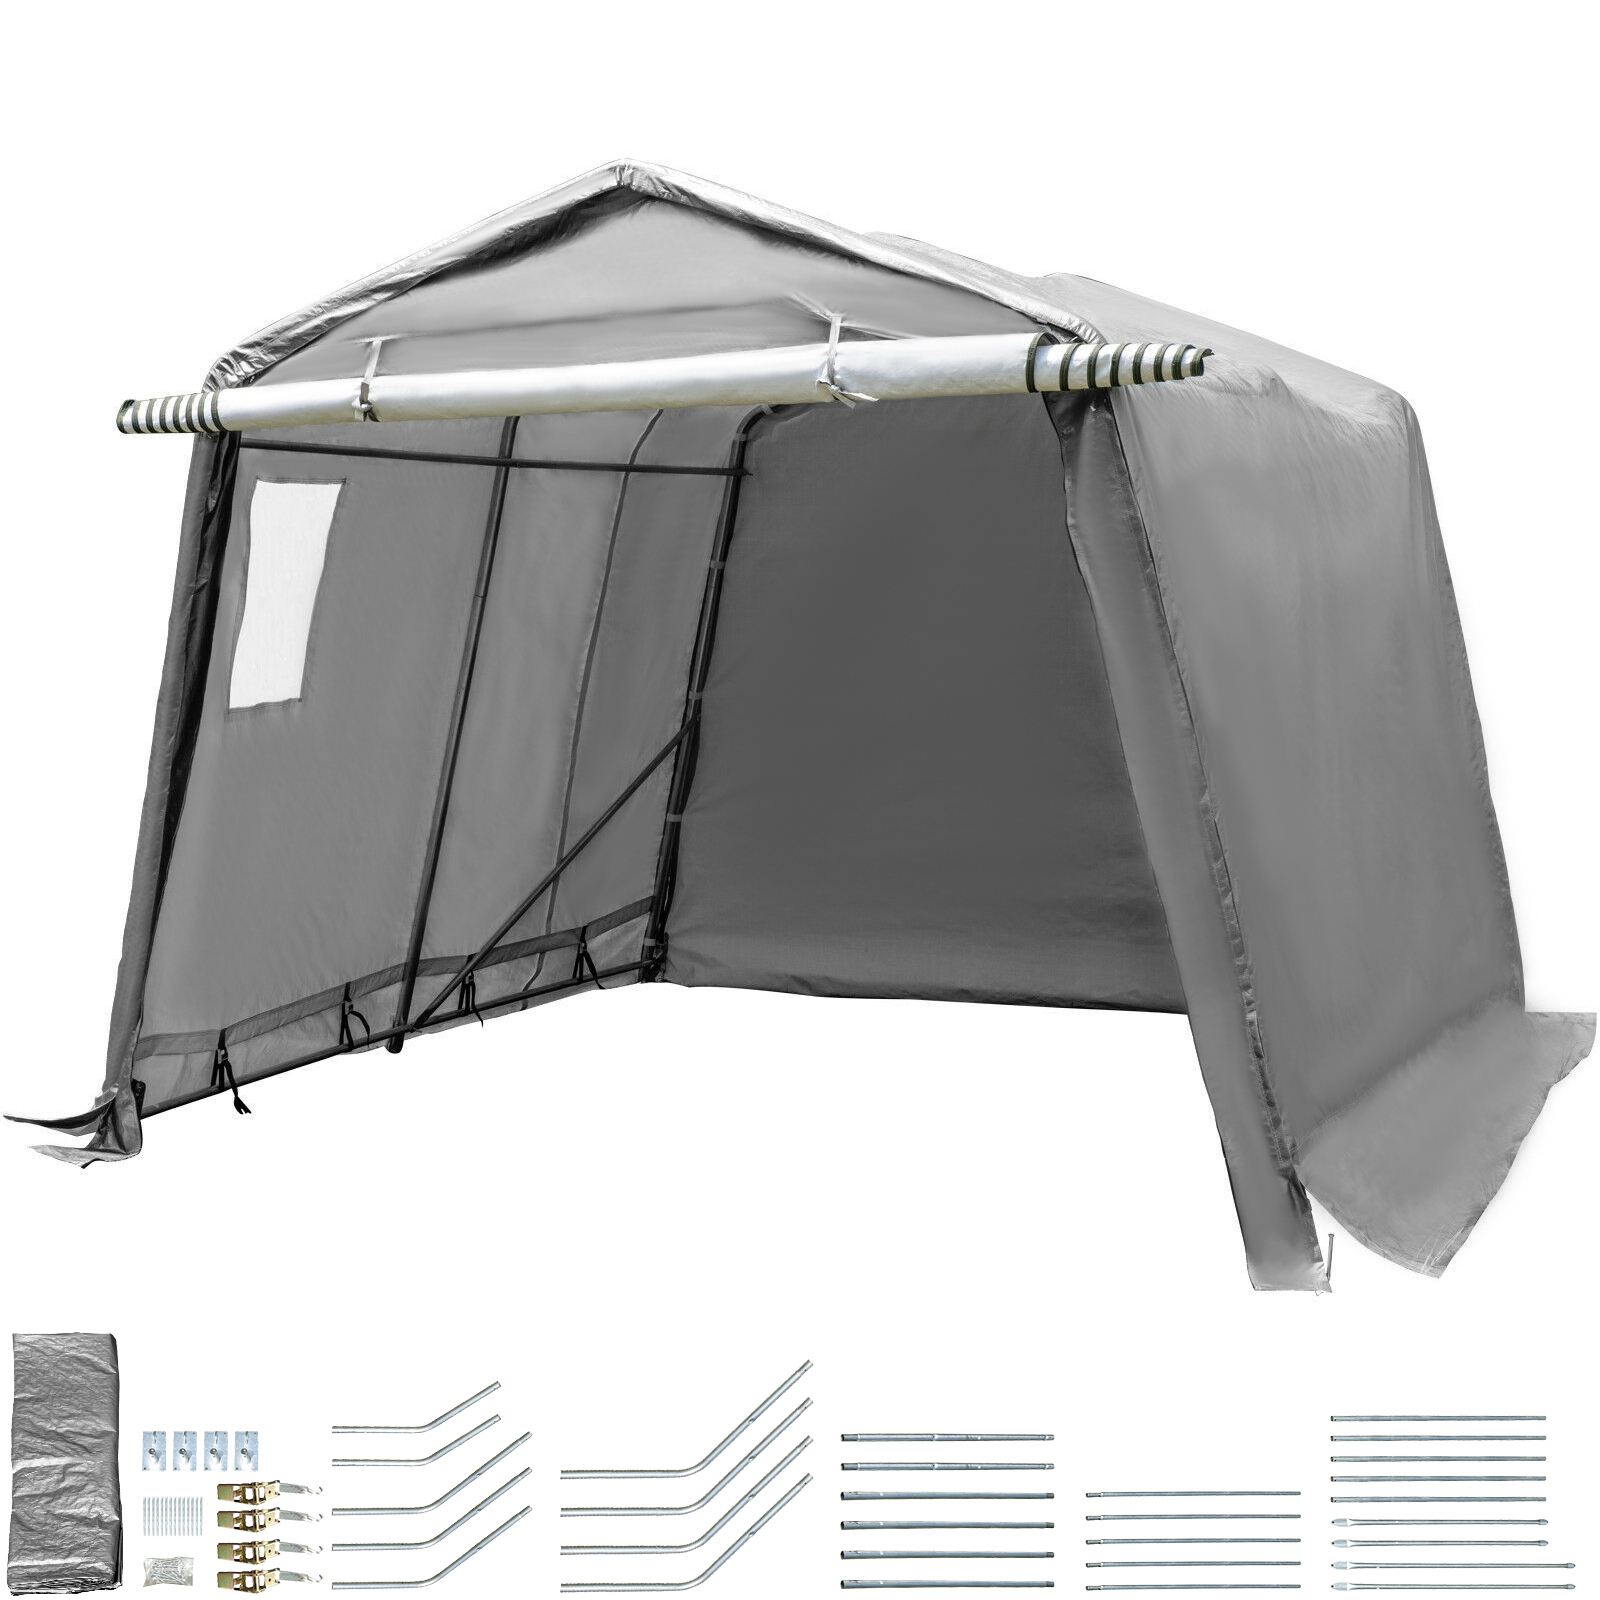 Portable Storage Shed Outdoor Carport Canopy Garage Shelter Steel Tent 10x10 Ft от Vevor Many GEOs